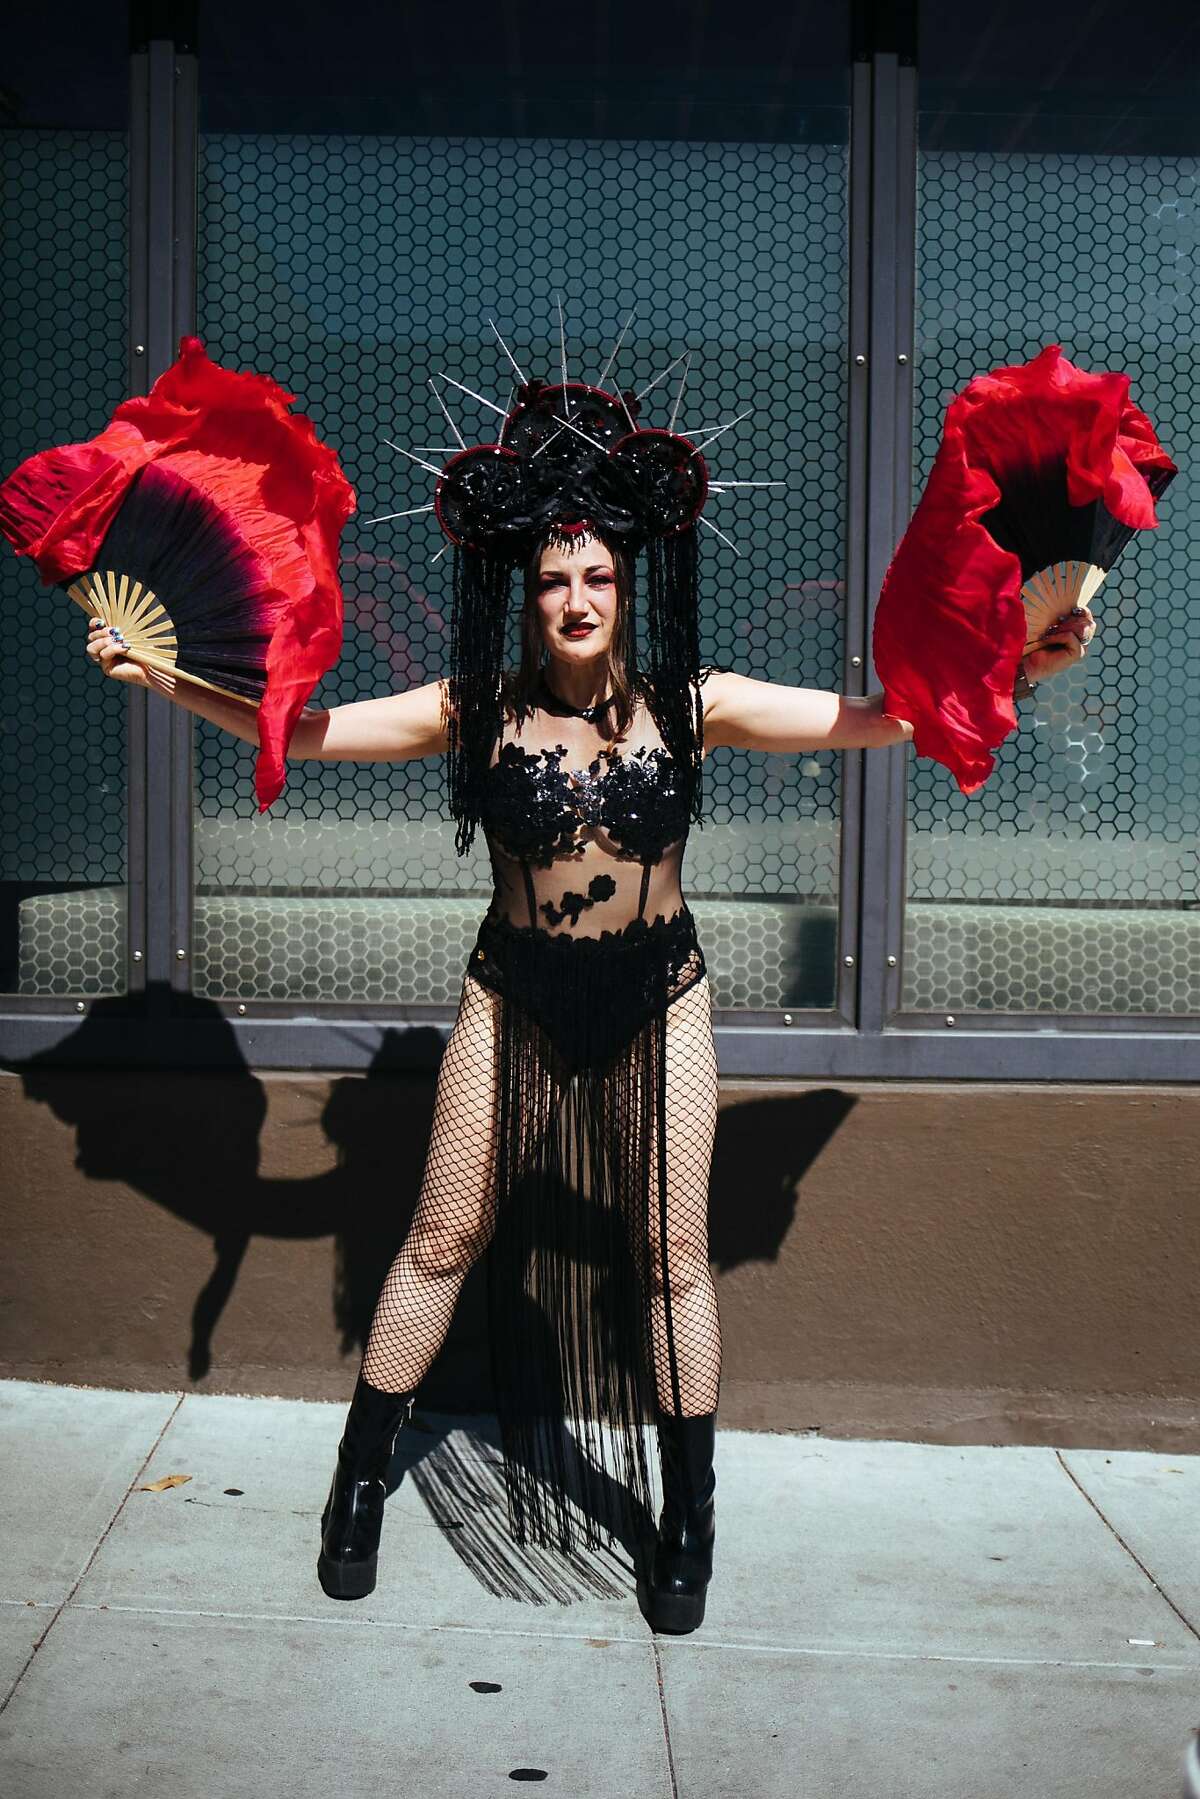 Kinky Sex Has Its Day At Sf S Folsom Street Fair